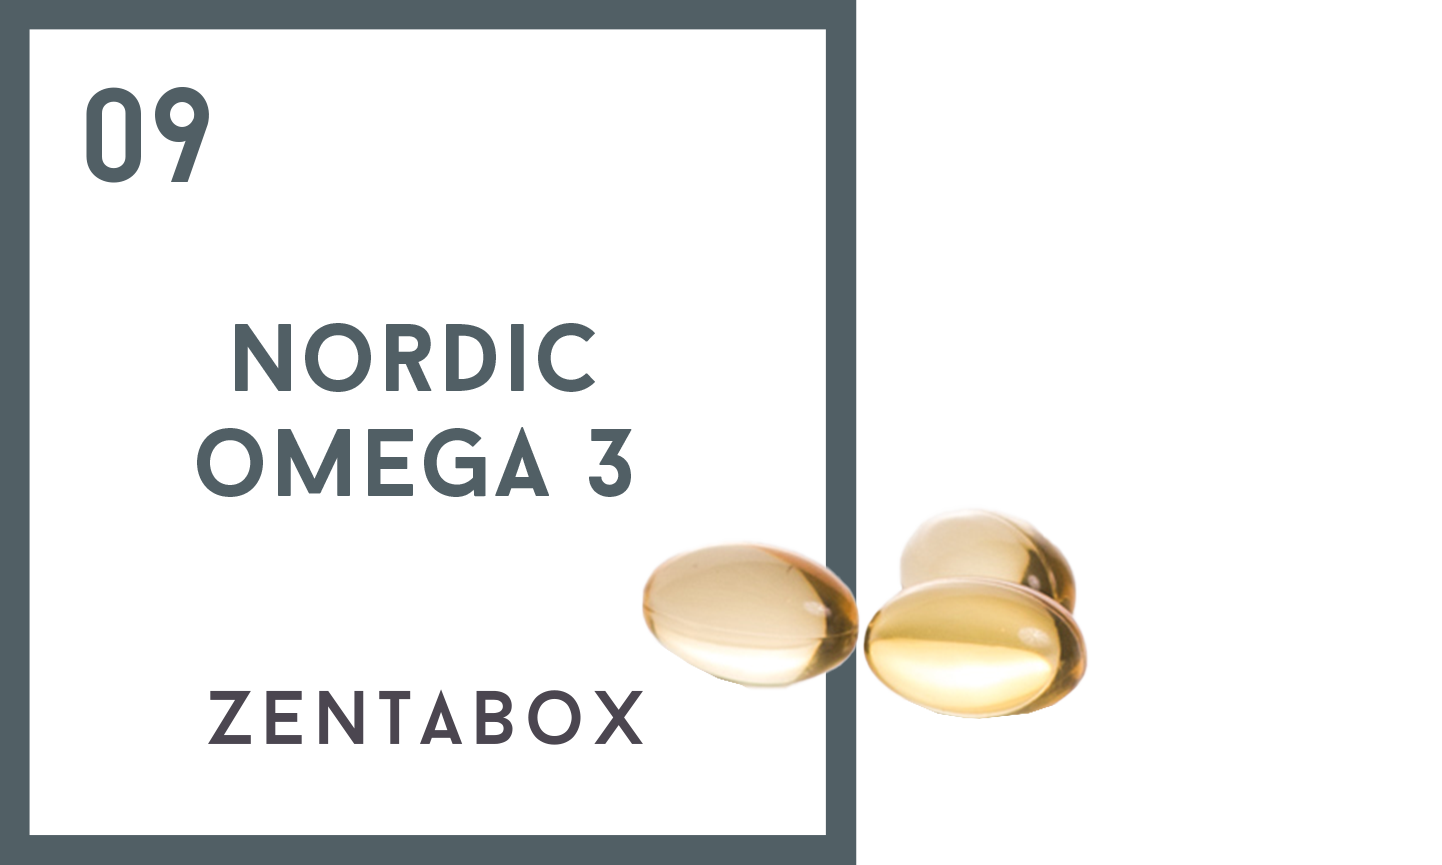 Nordic Omega3